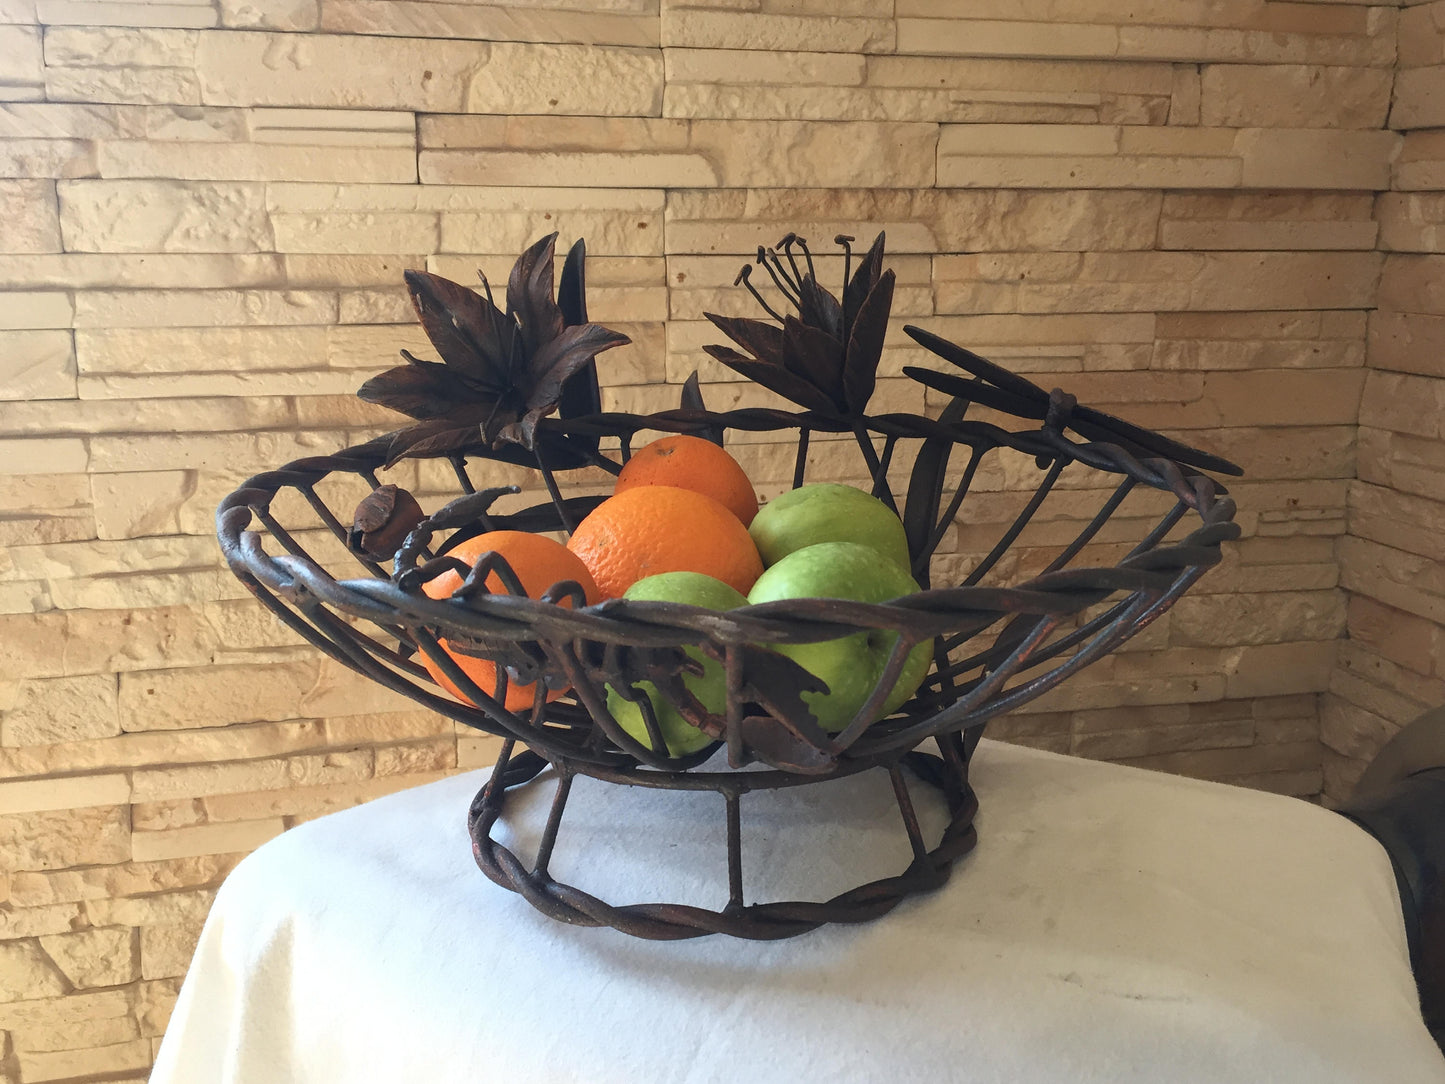 Fruit plate, metal fruit bowl, veggie tray, vegetable tray, fruit tray, fruit holder,kitchen basket,eggs basket, picnic, BBQ, lily, scorpion